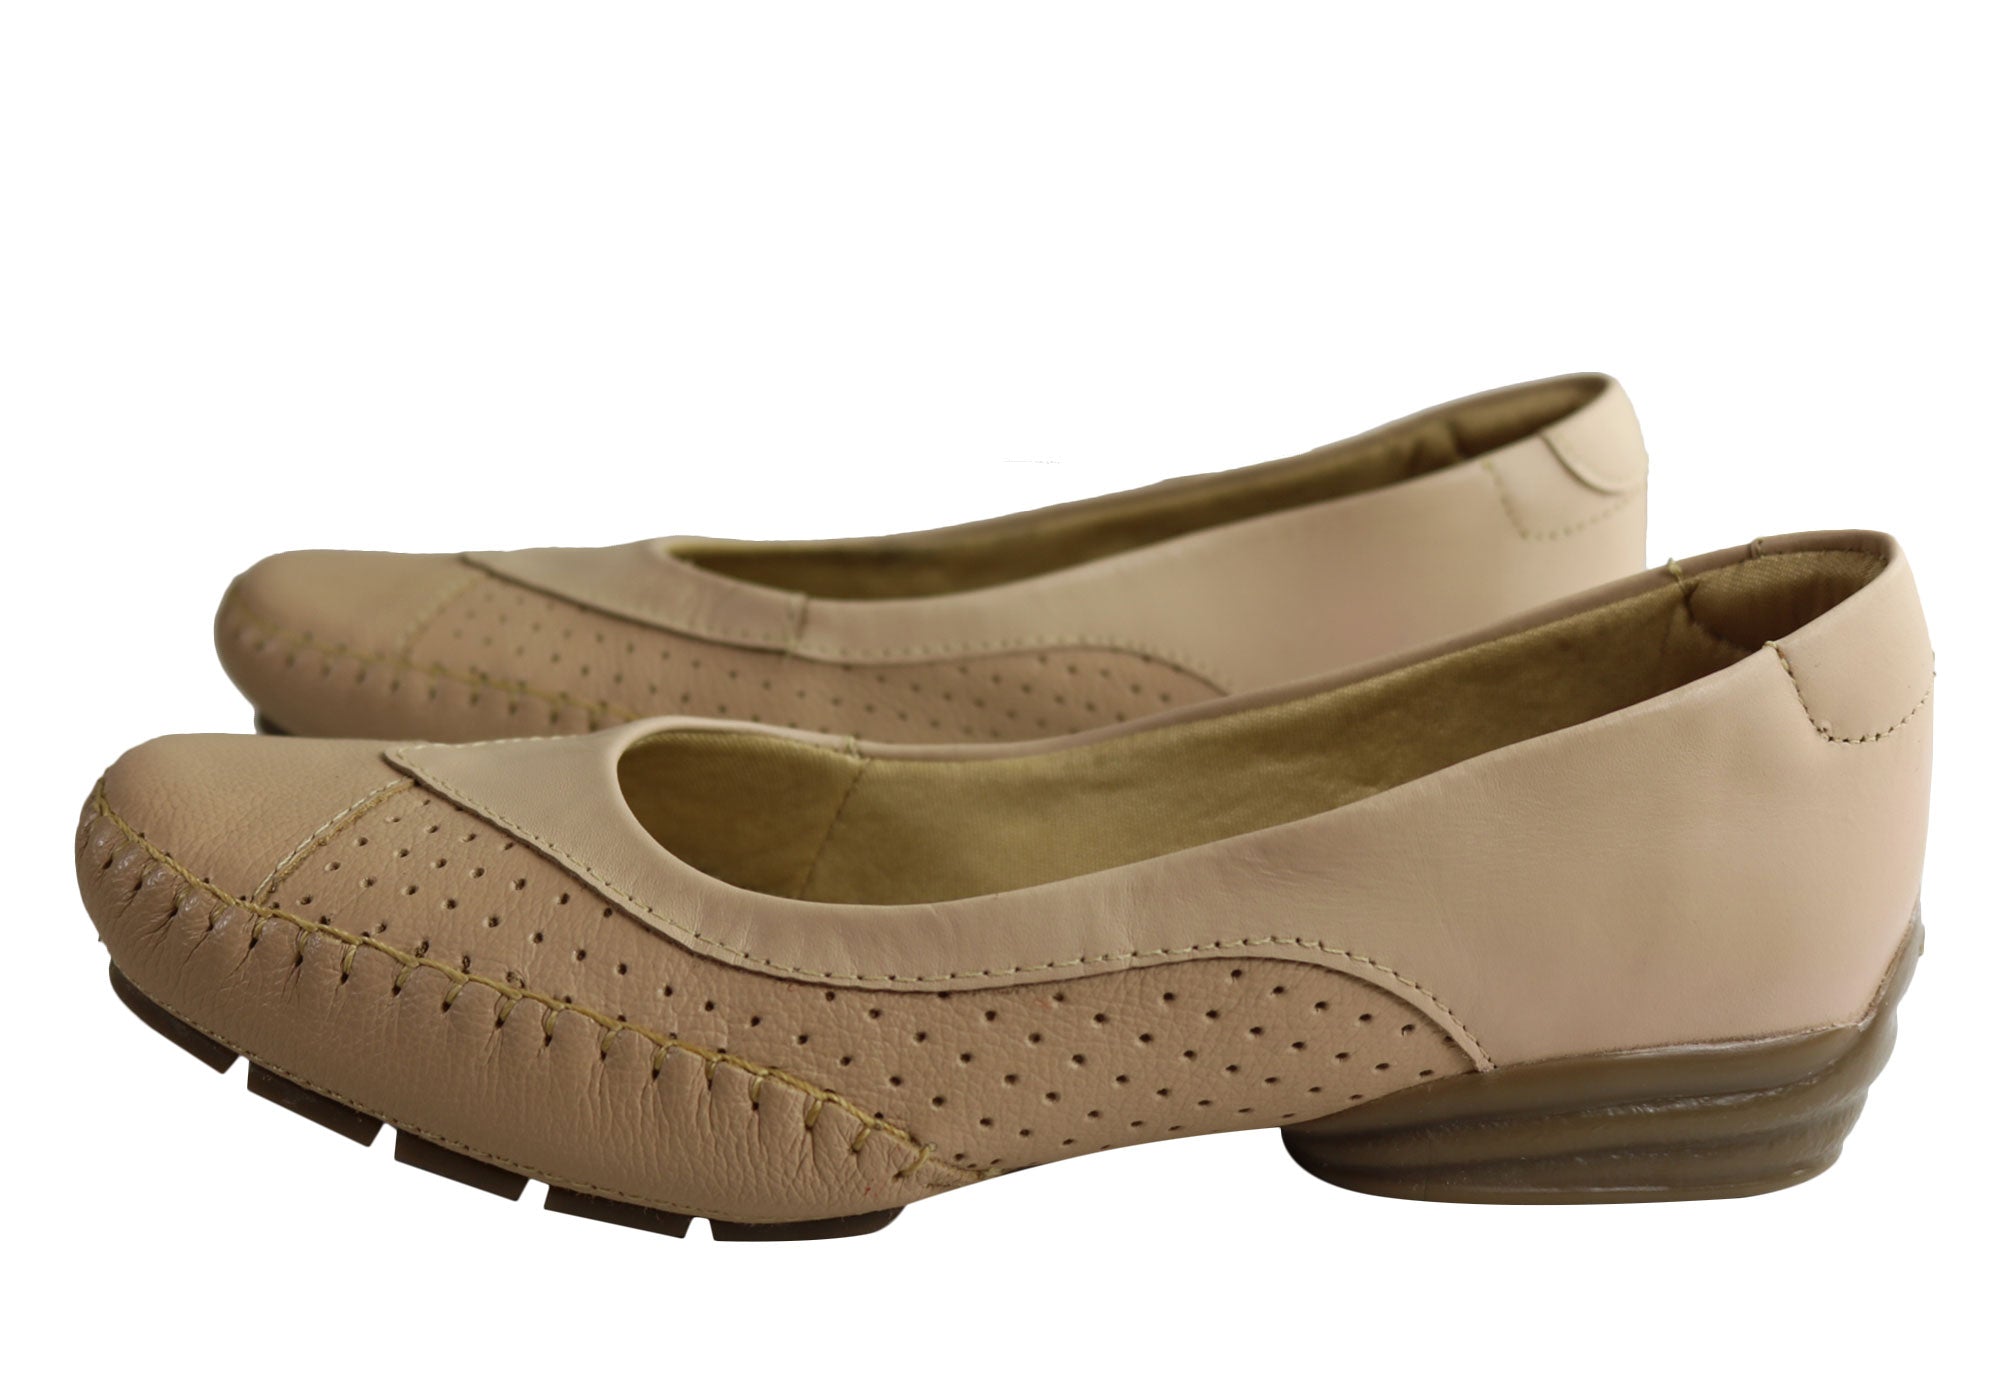 Comfortshoeco Plato Womens Comfort Cushioned Leather Low Heel Shoes